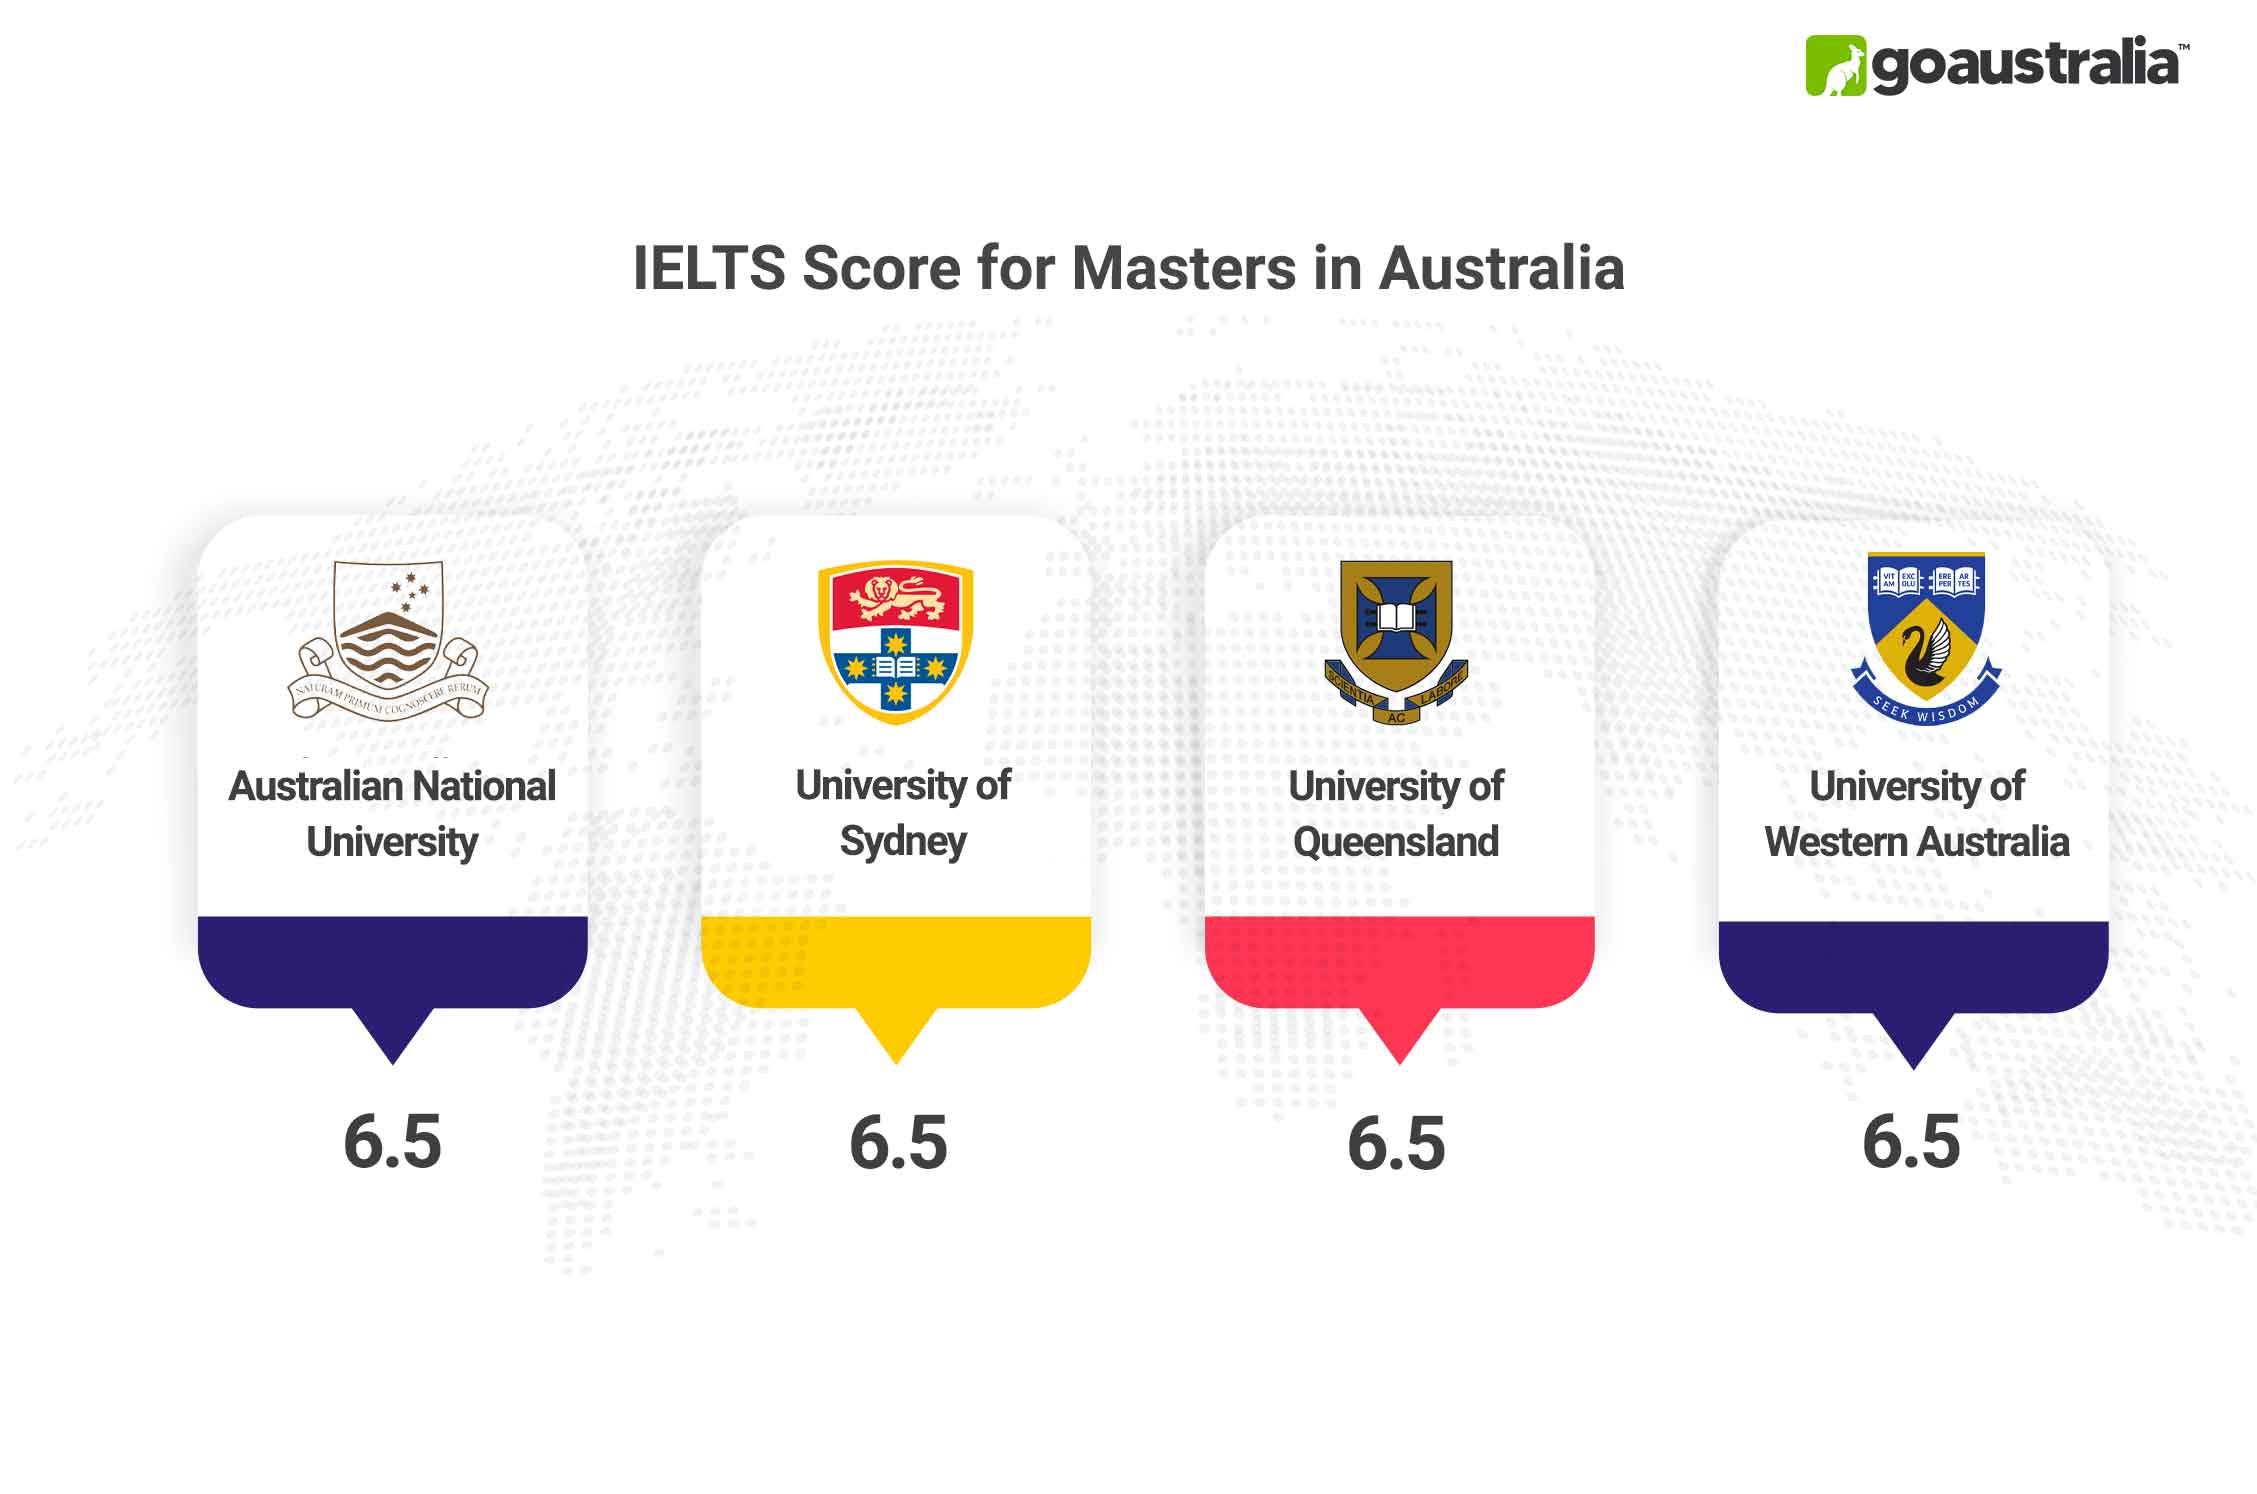 Masters in Australia